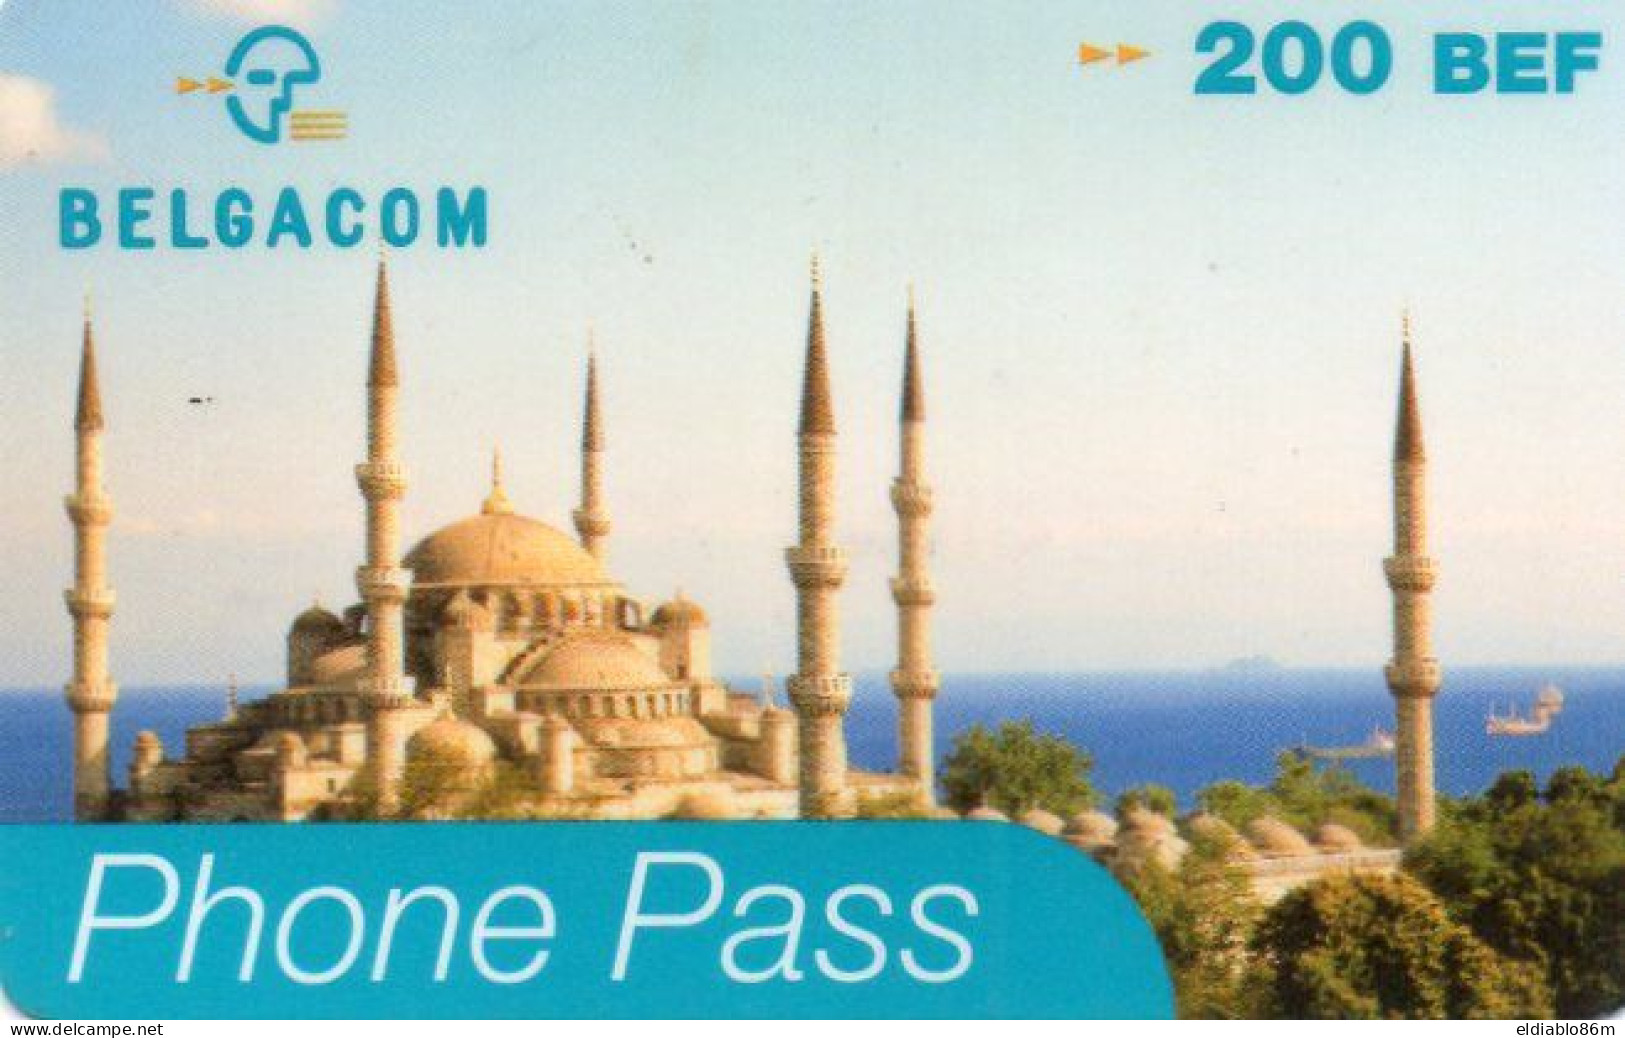 BELGIUM - PREPAID - BELGACOM - PHONE PASS - HAGIA SOPHIA ISTANBUL - TURKEY RELATED - [2] Prepaid & Refill Cards